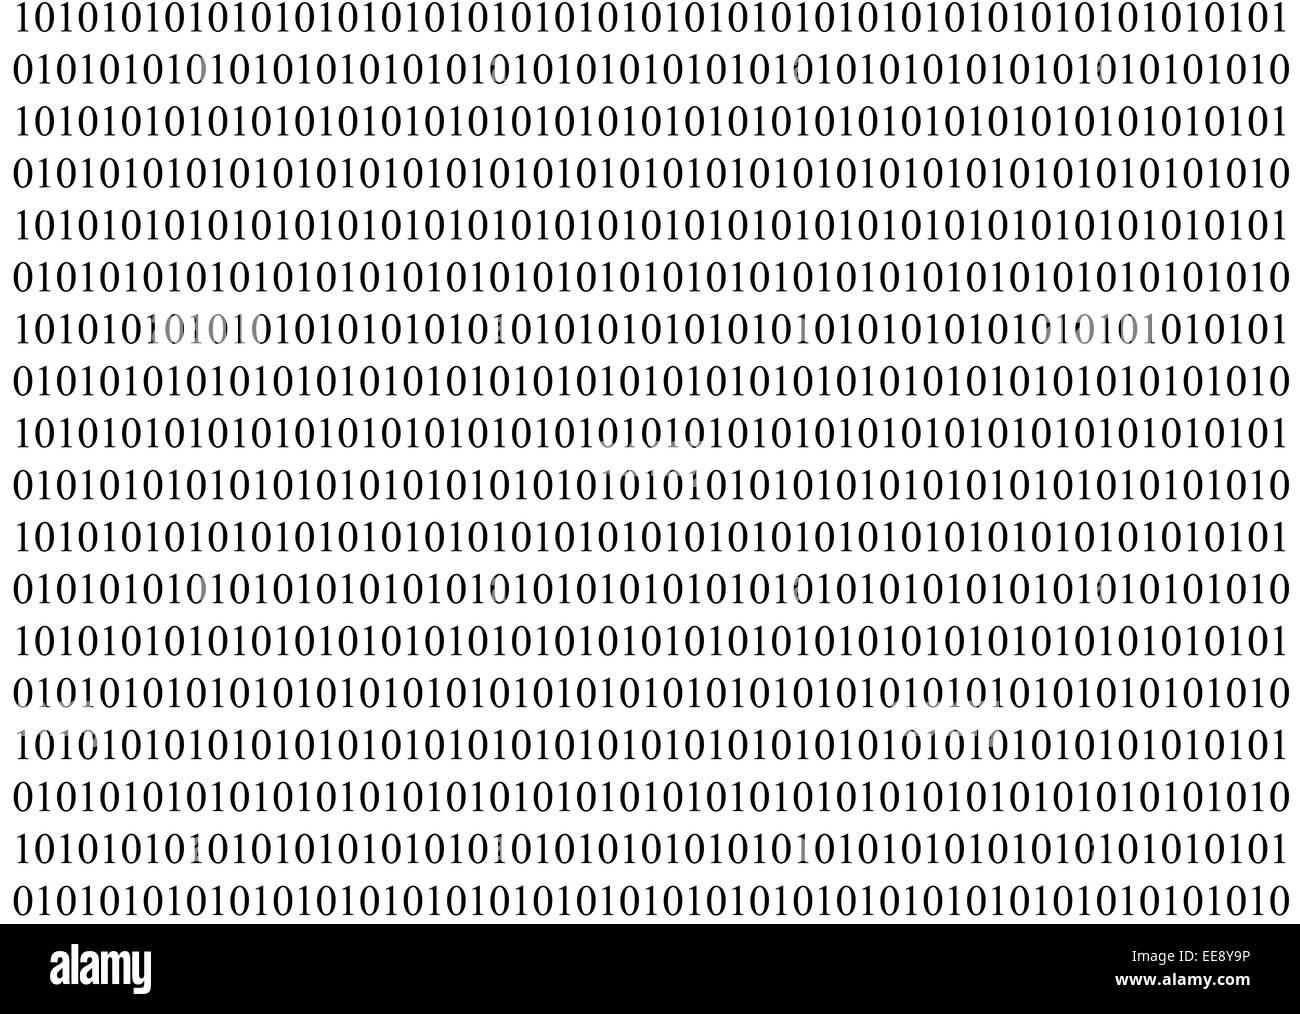 Binary Code Numerical Sequence Digital data Stock Photo